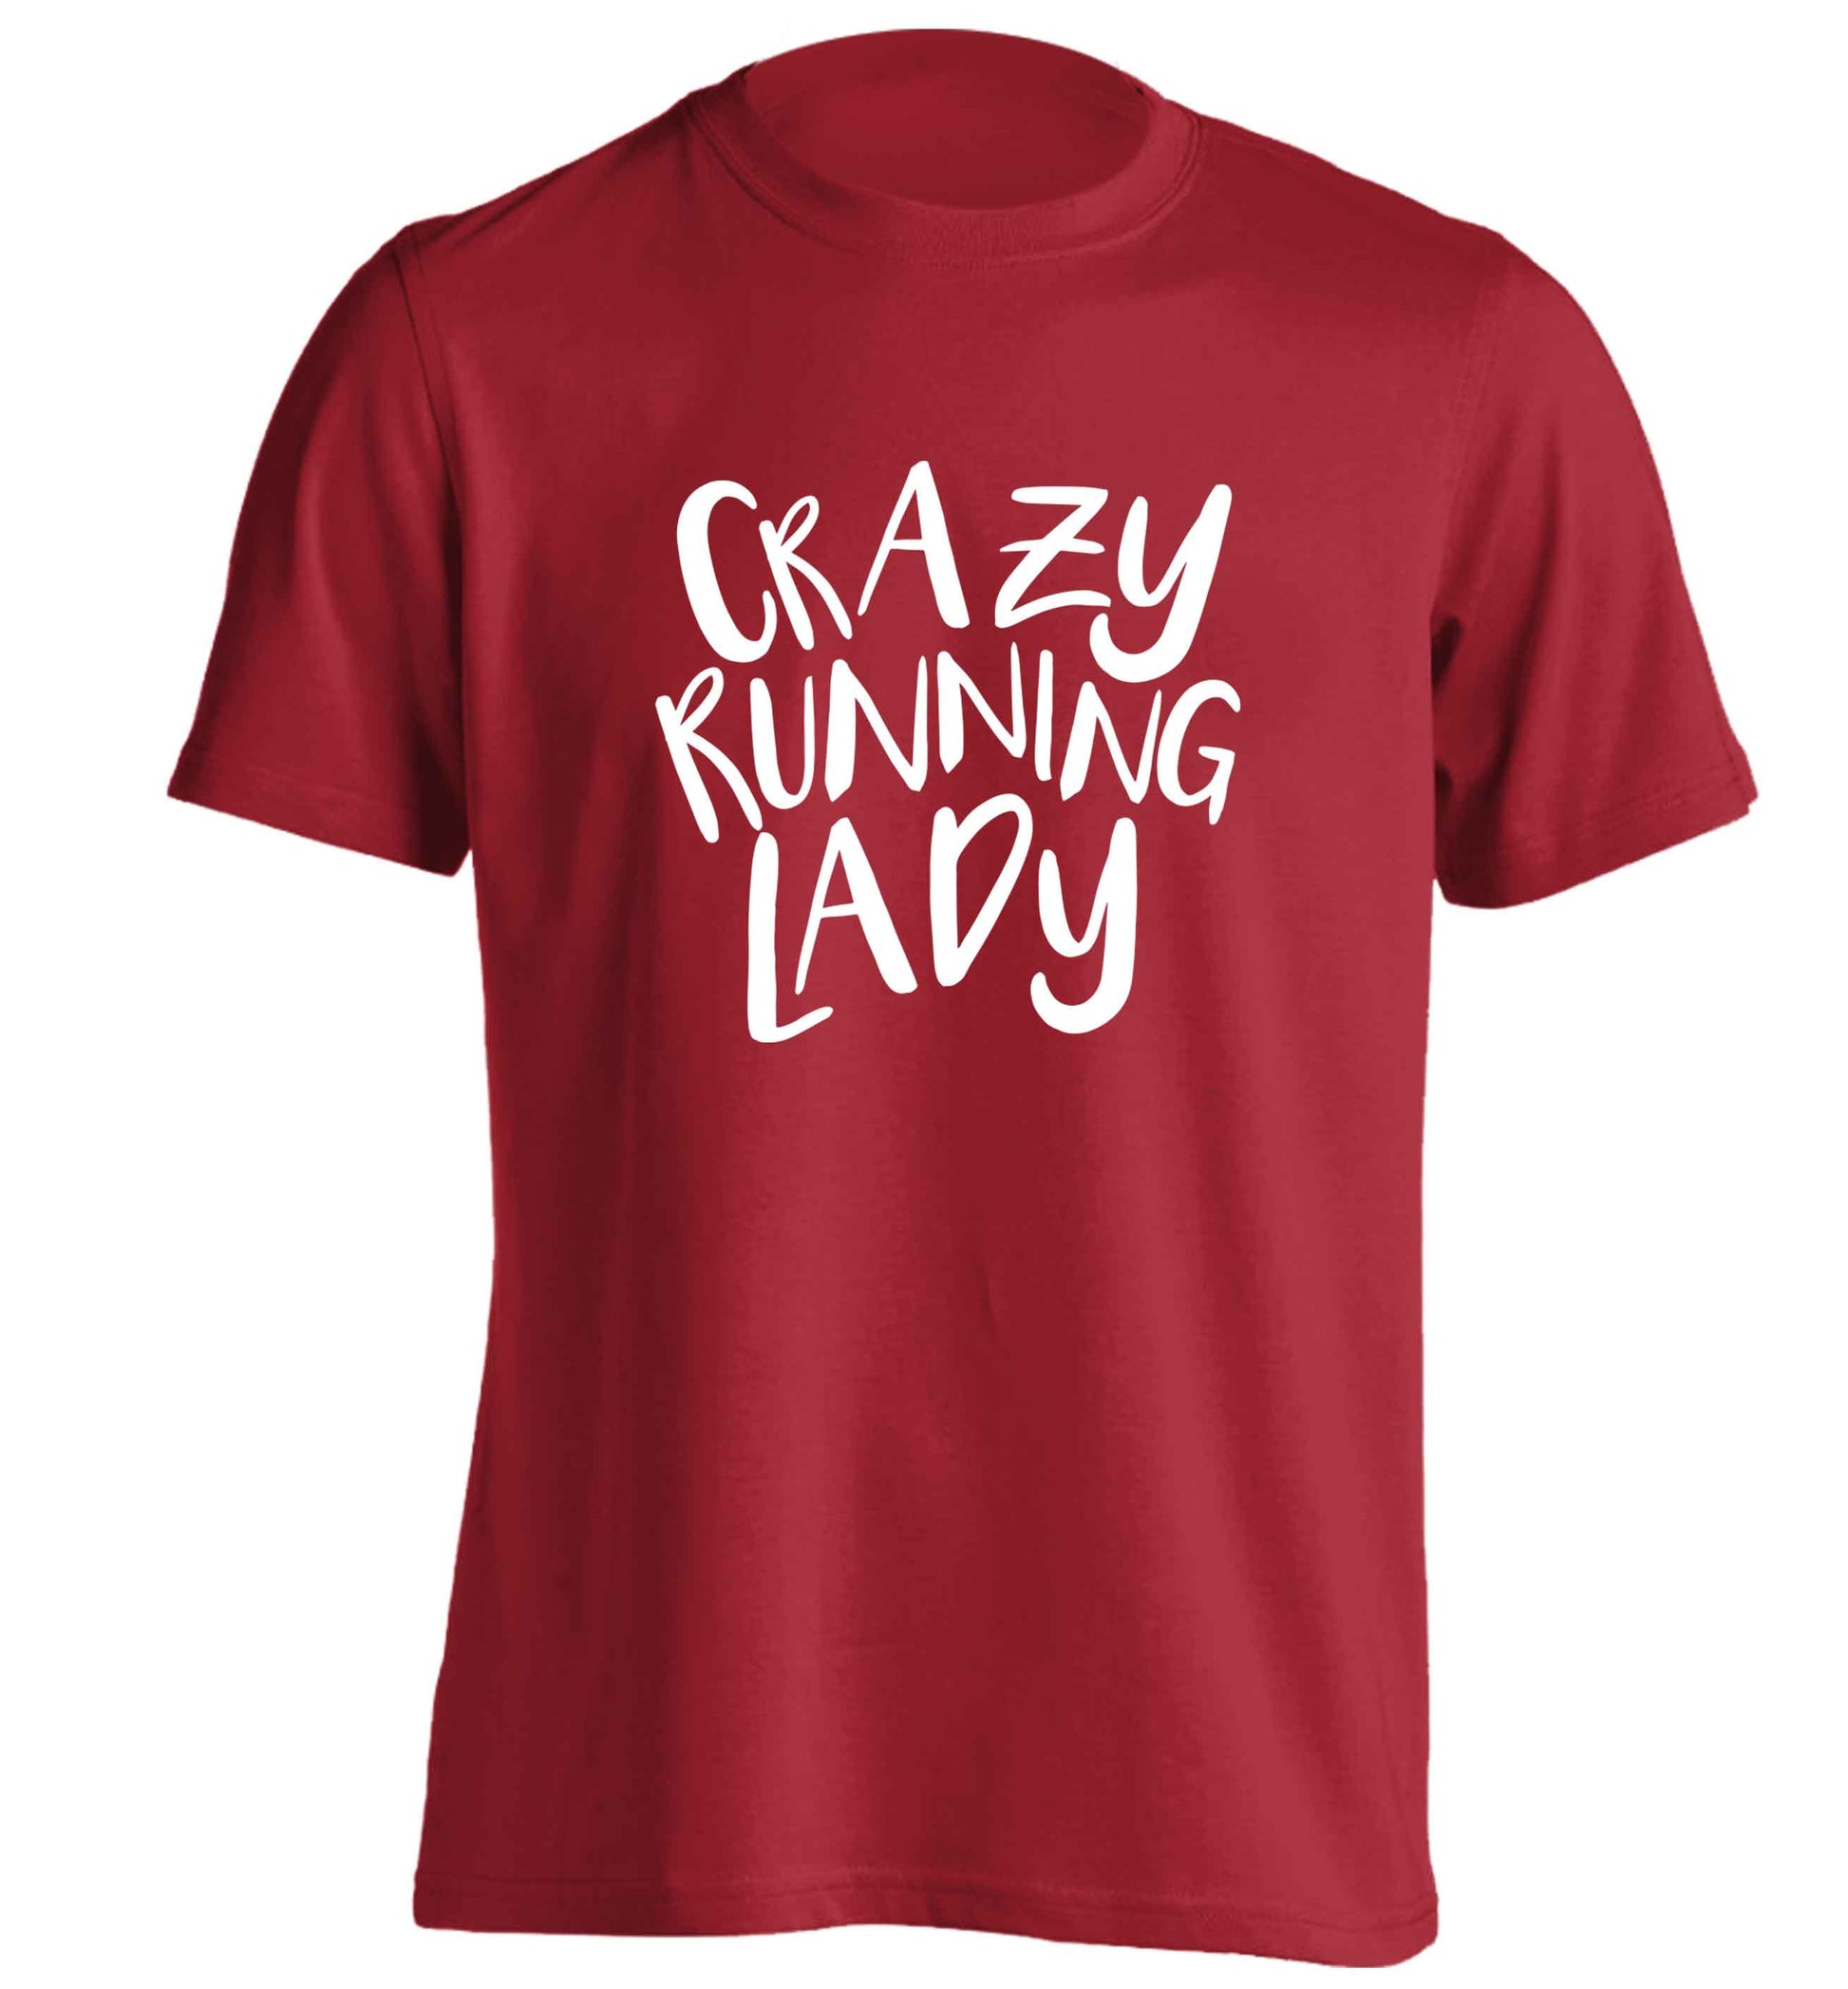 Crazy running lady adults unisex red Tshirt 2XL